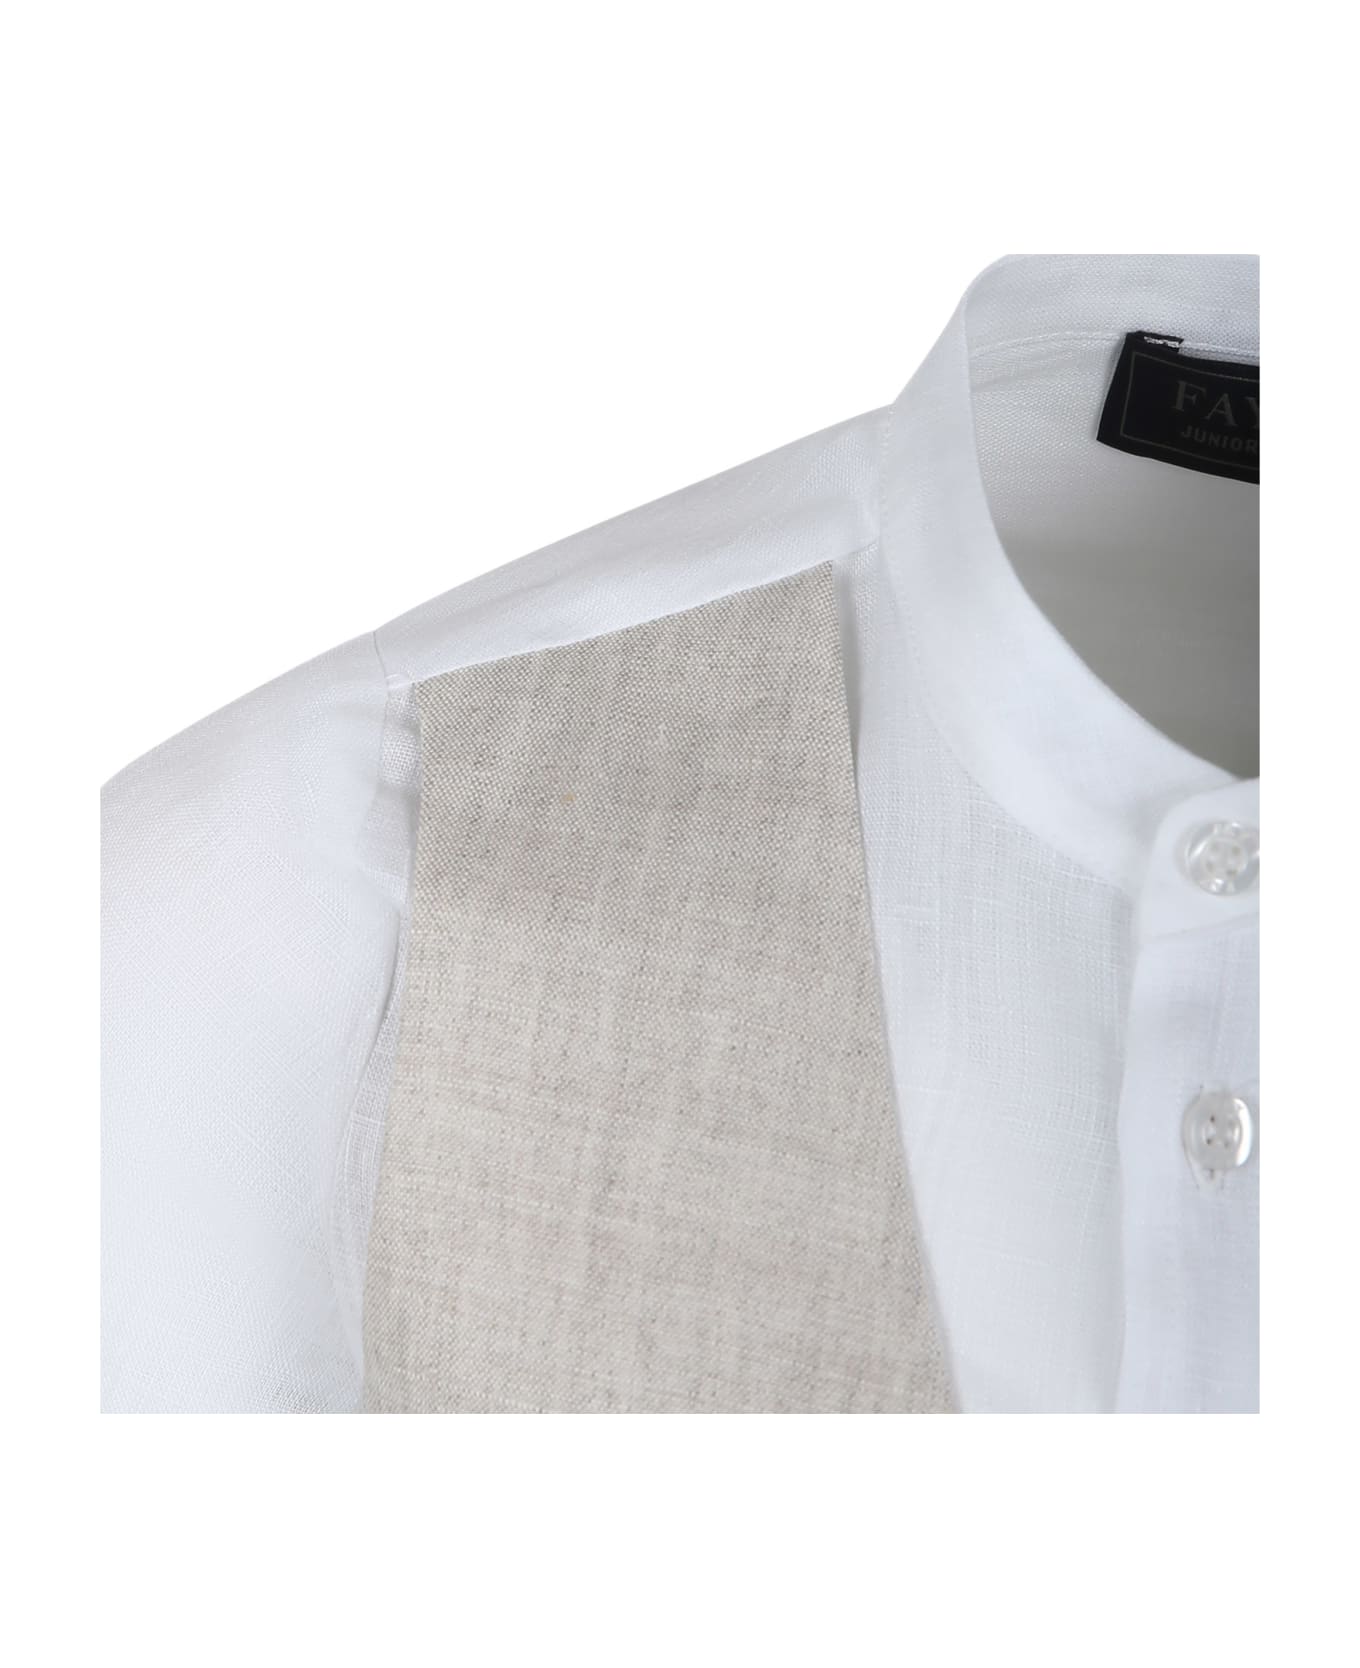 Fay White Shirt For Boy - White